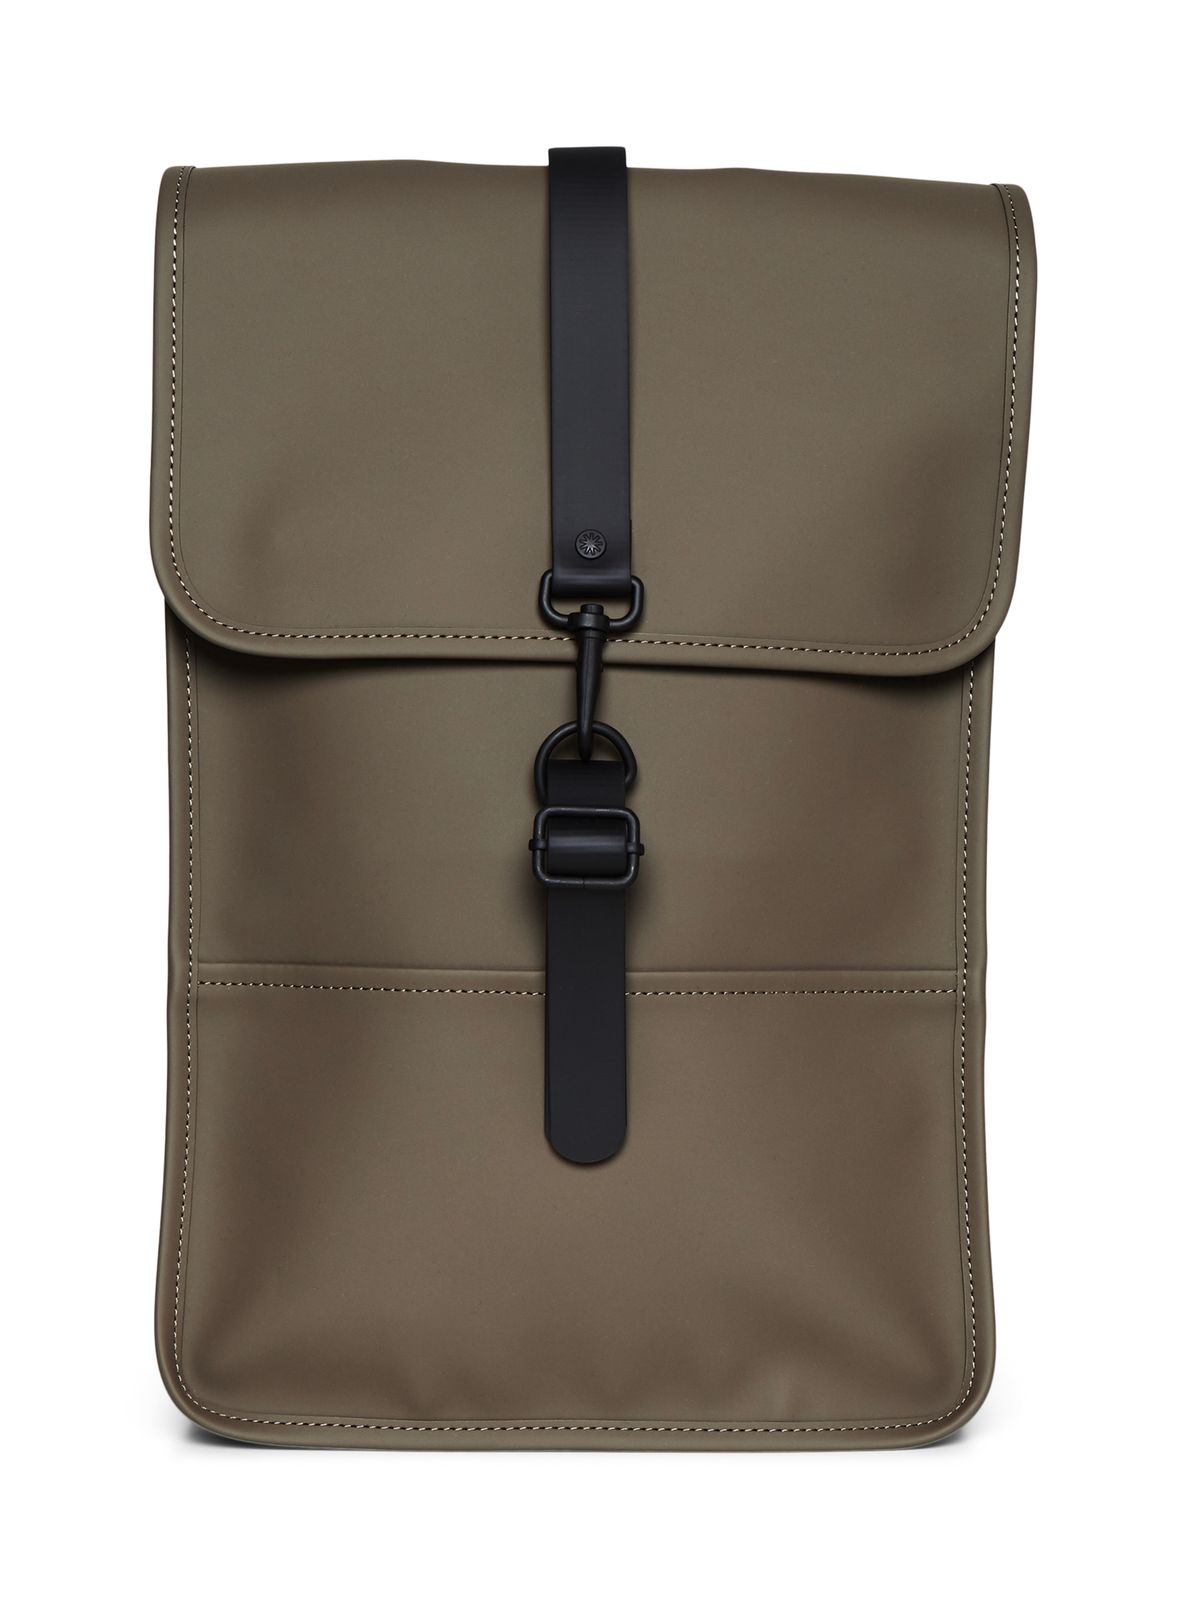 RAINS Backpack Mini Wood | Buy bags, purses & accessories online | modeherz